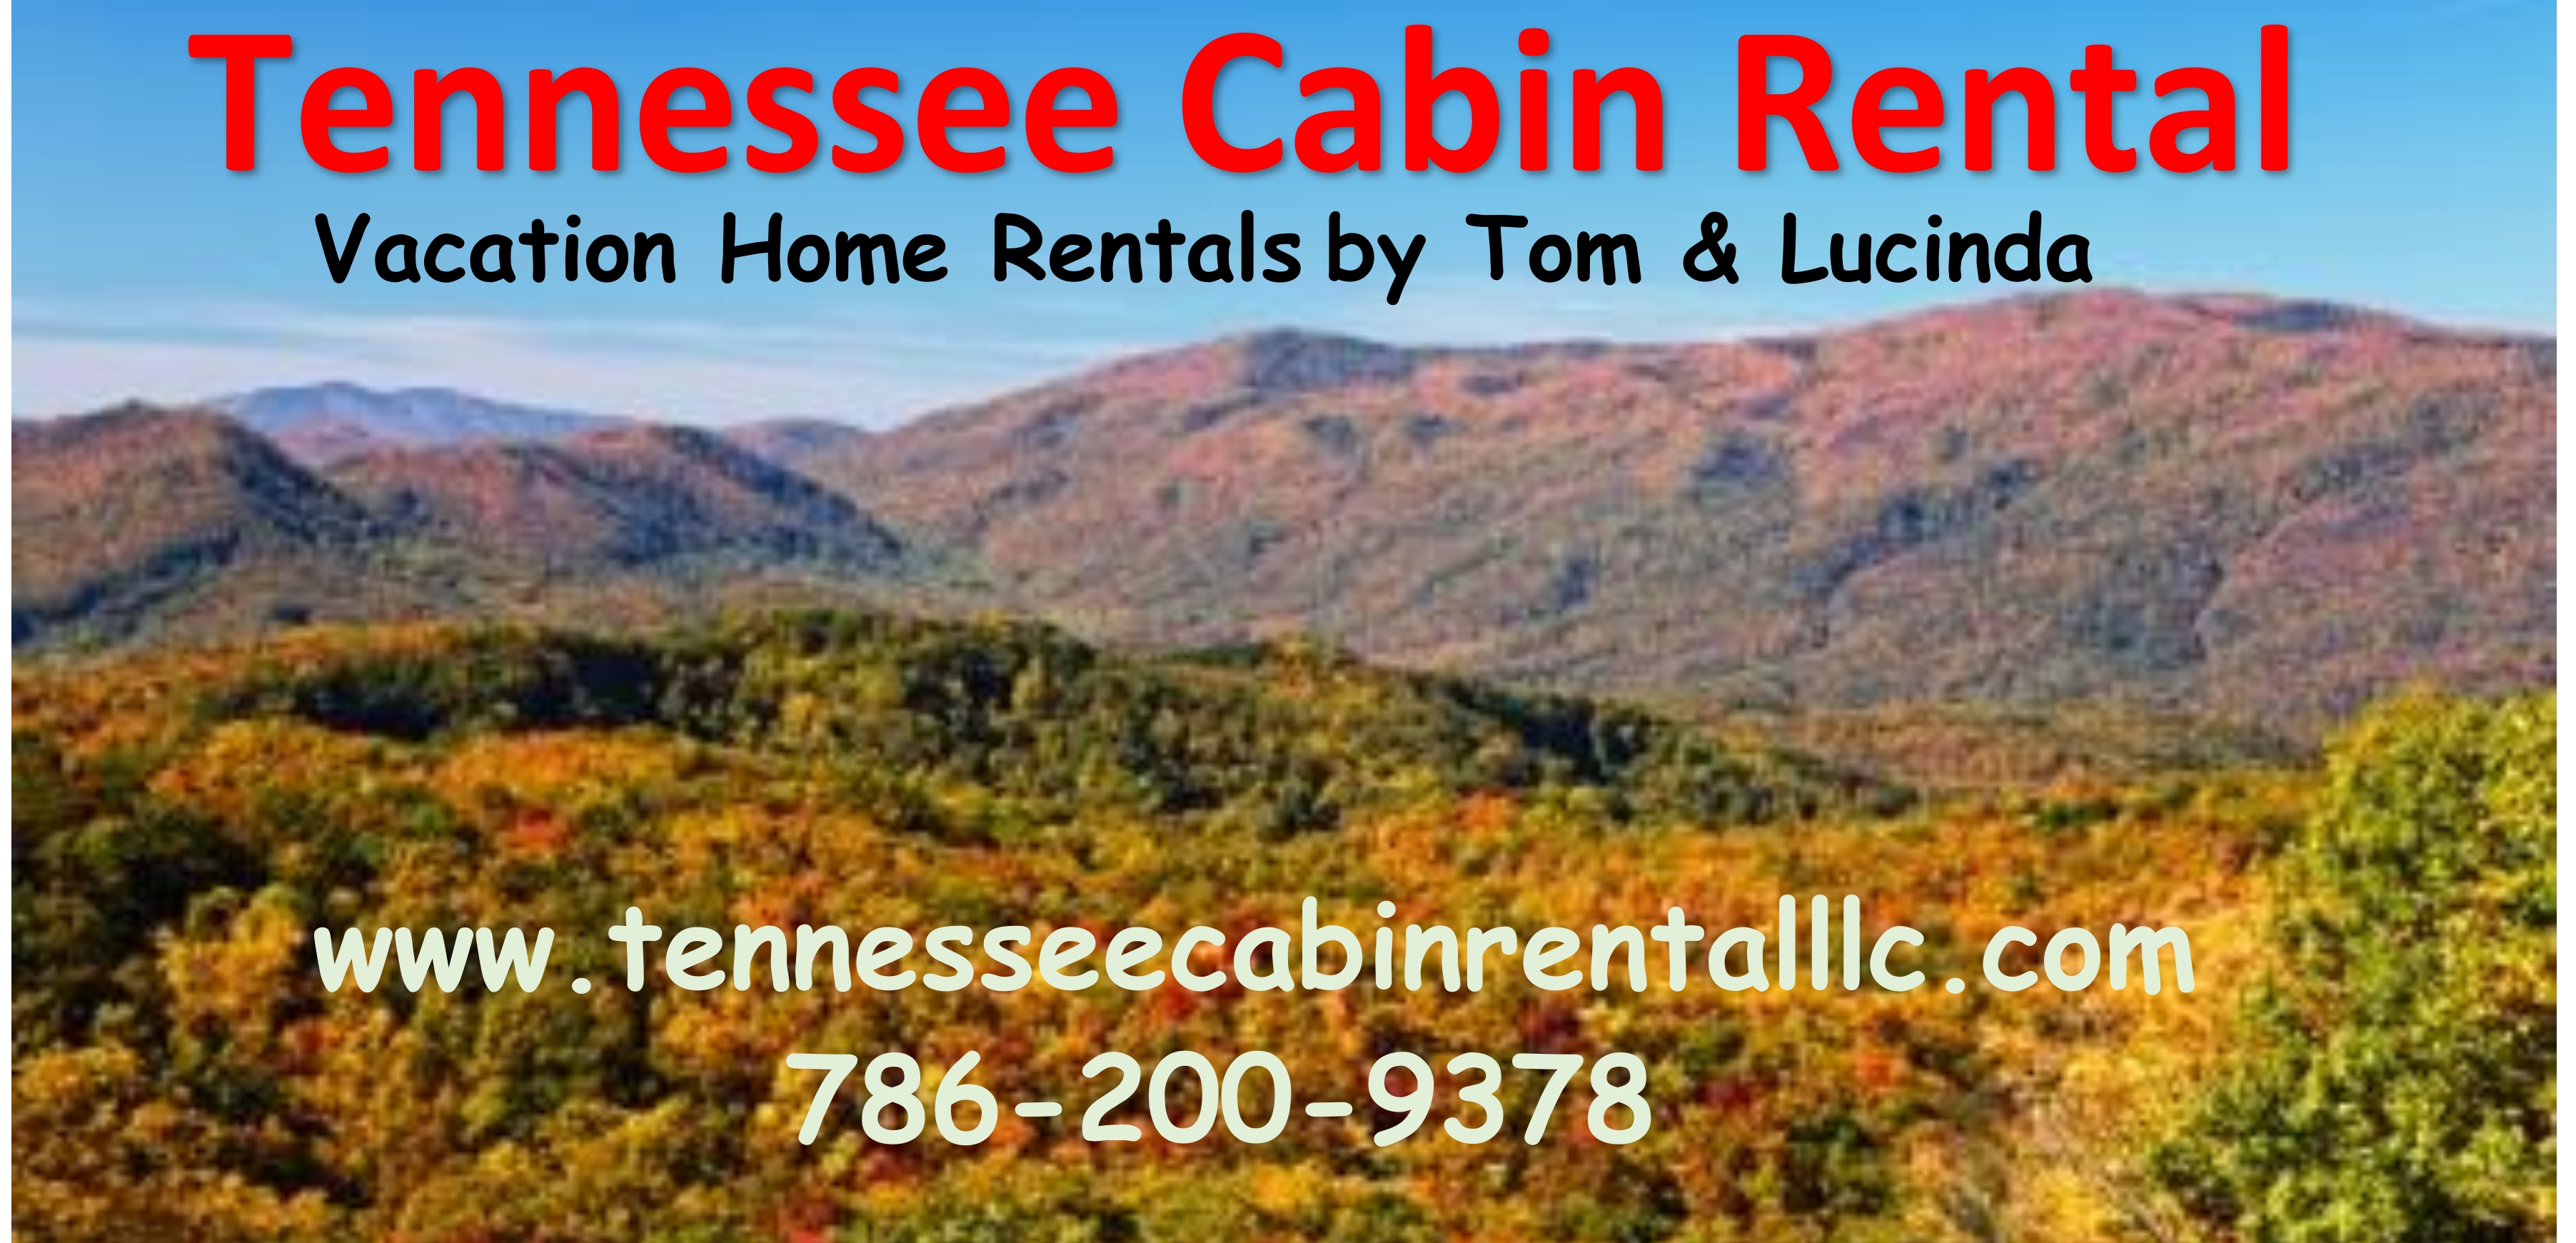 Tennessee Cabin Rental LLC